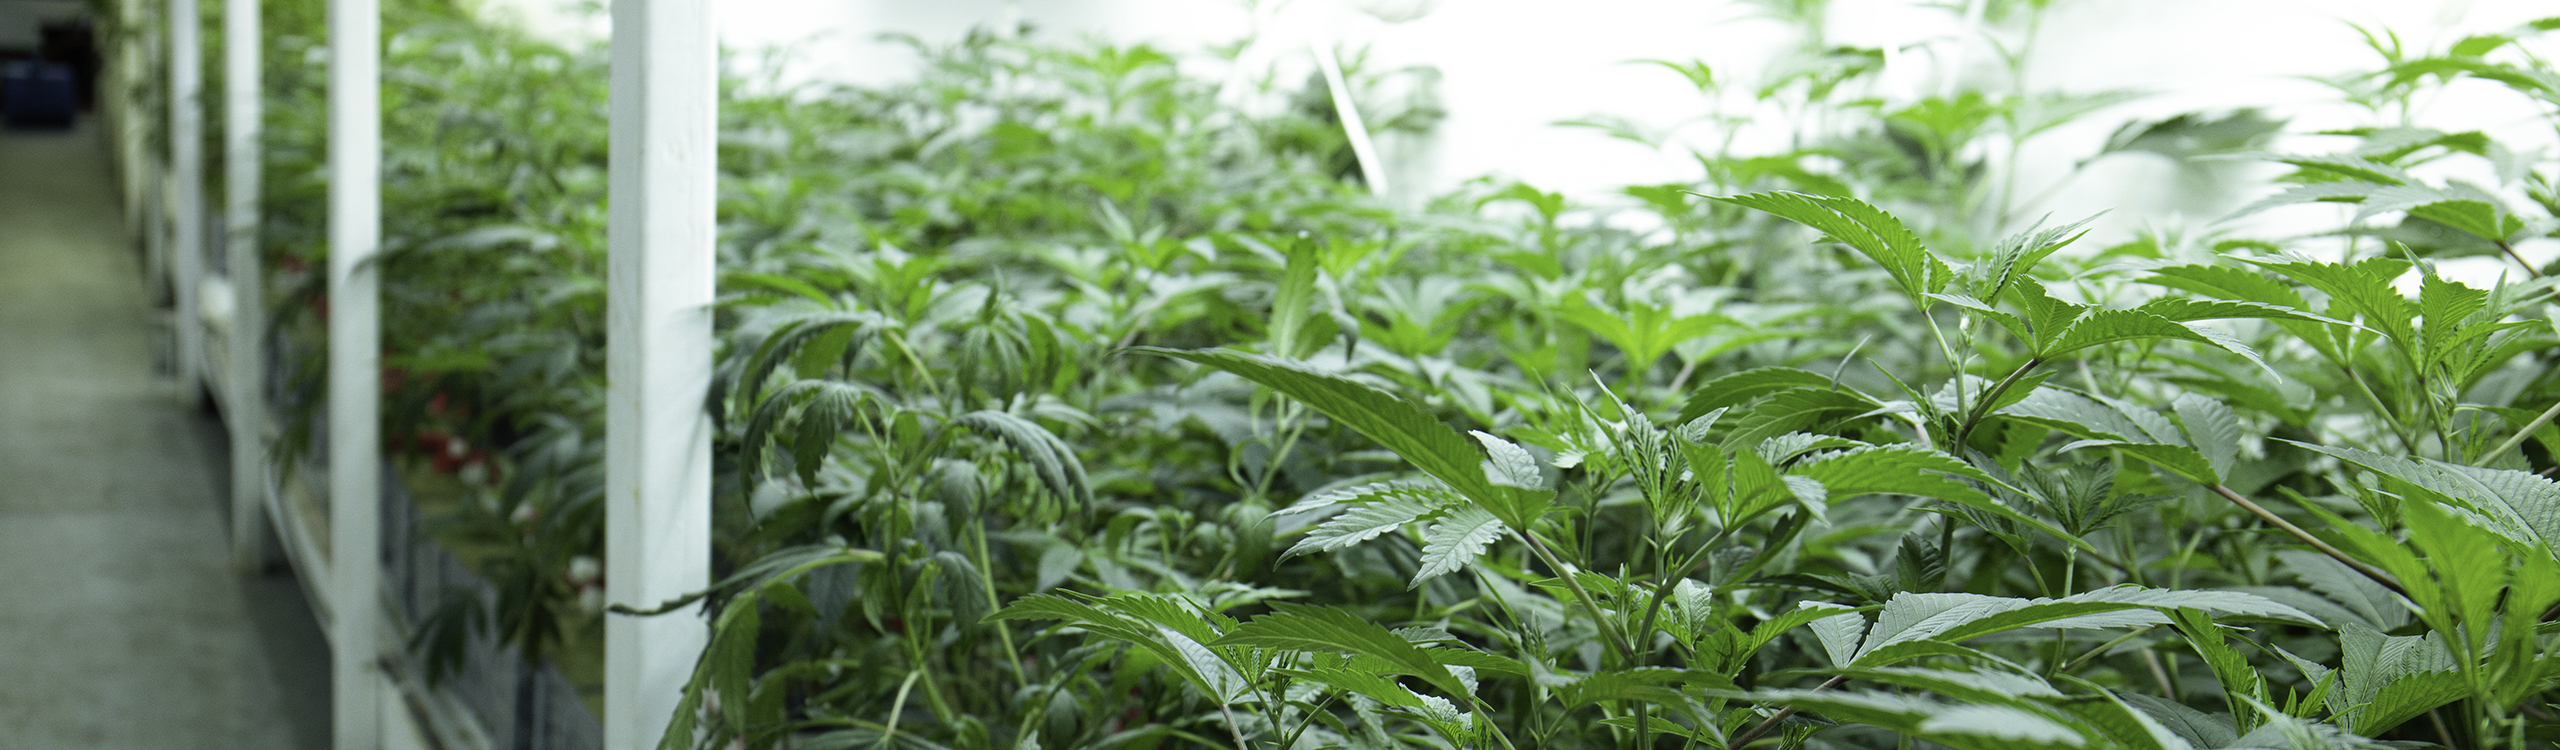 Cannabis plants growing : Photo